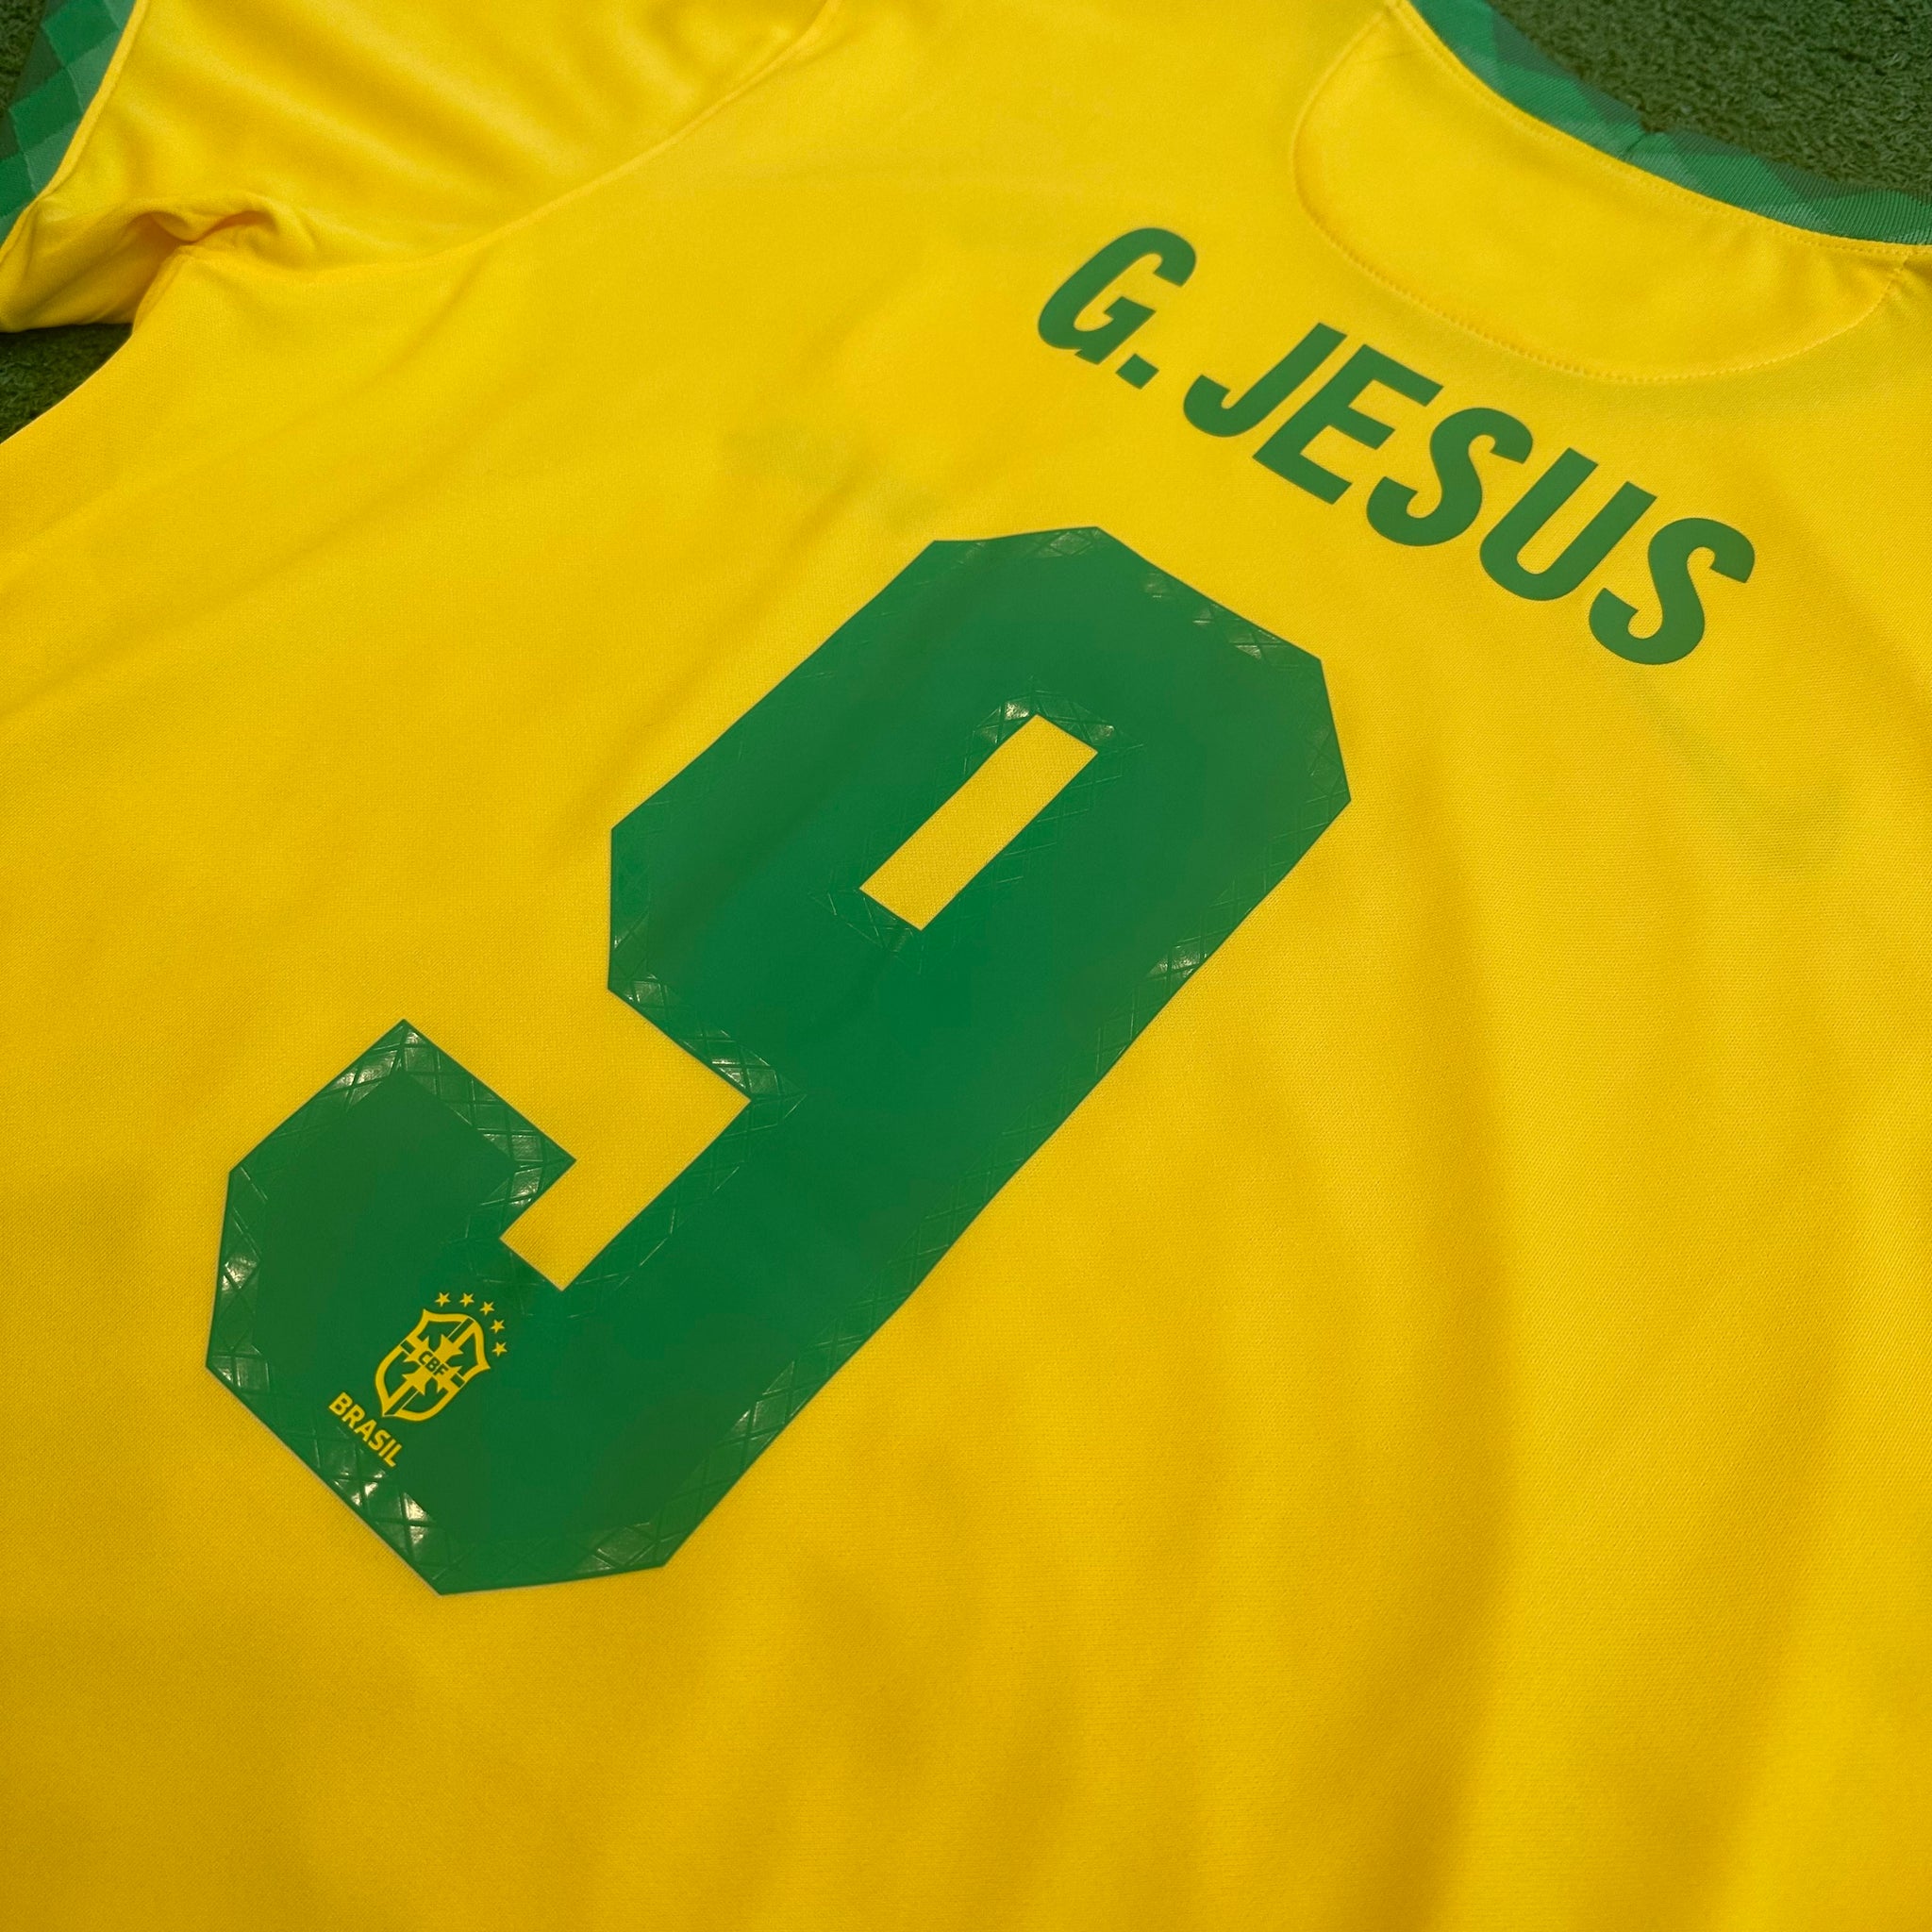 Nike Brazil #9 G. Jesus 2020 Home Football Kit (L)